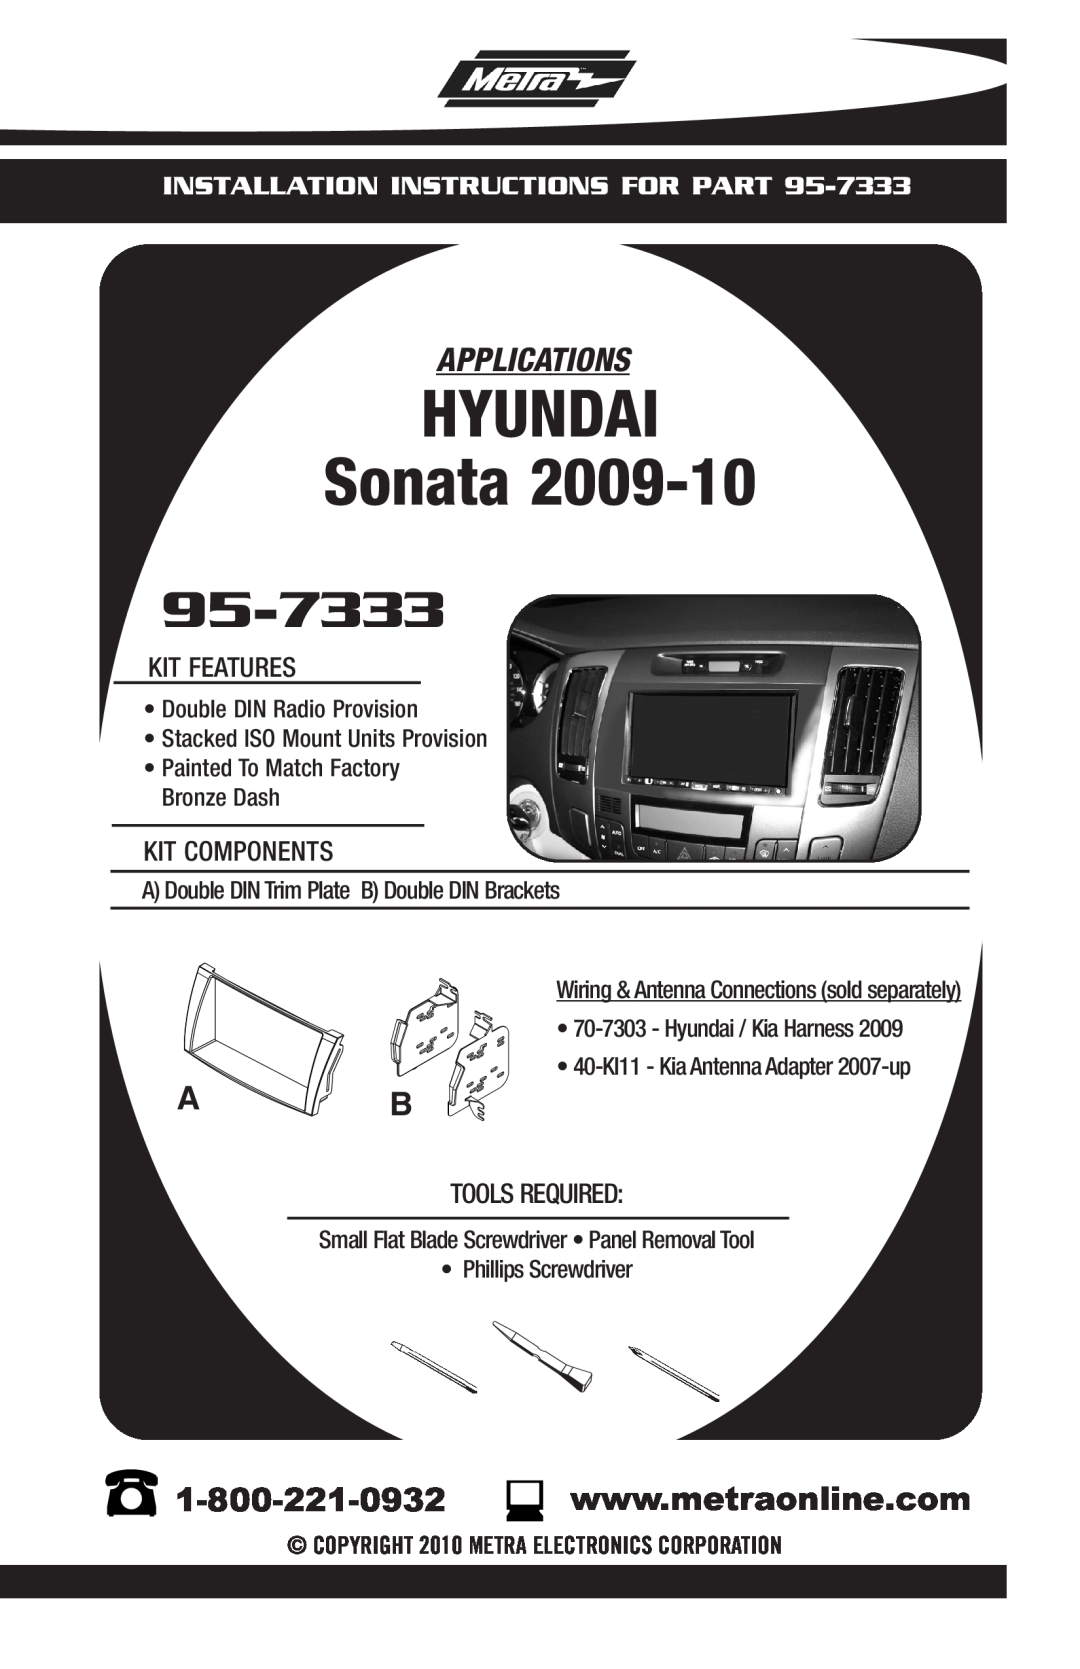 Hyundai 95-7333 installation instructions HYUNDAI Sonata, Applications, A B, Installation Instructions For Part 